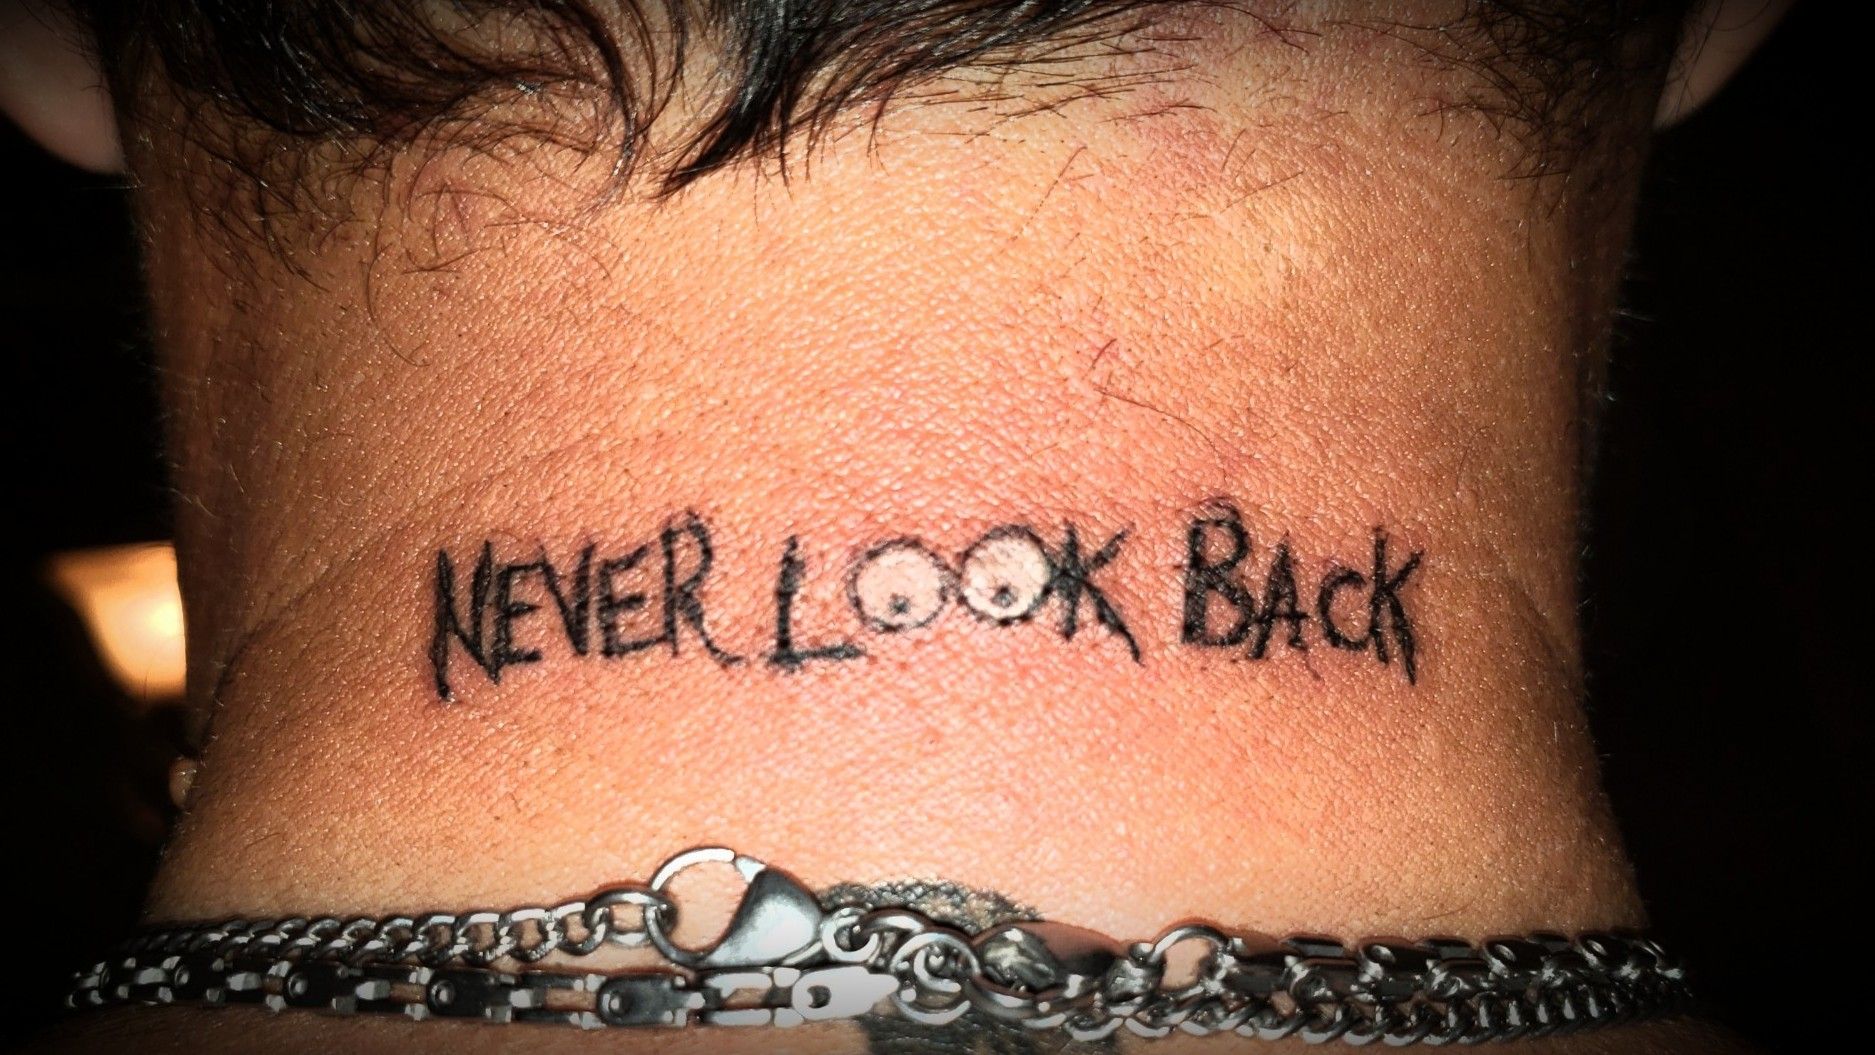 Never Look Back  tattoo by cesartruiz   ink highla  Flickr